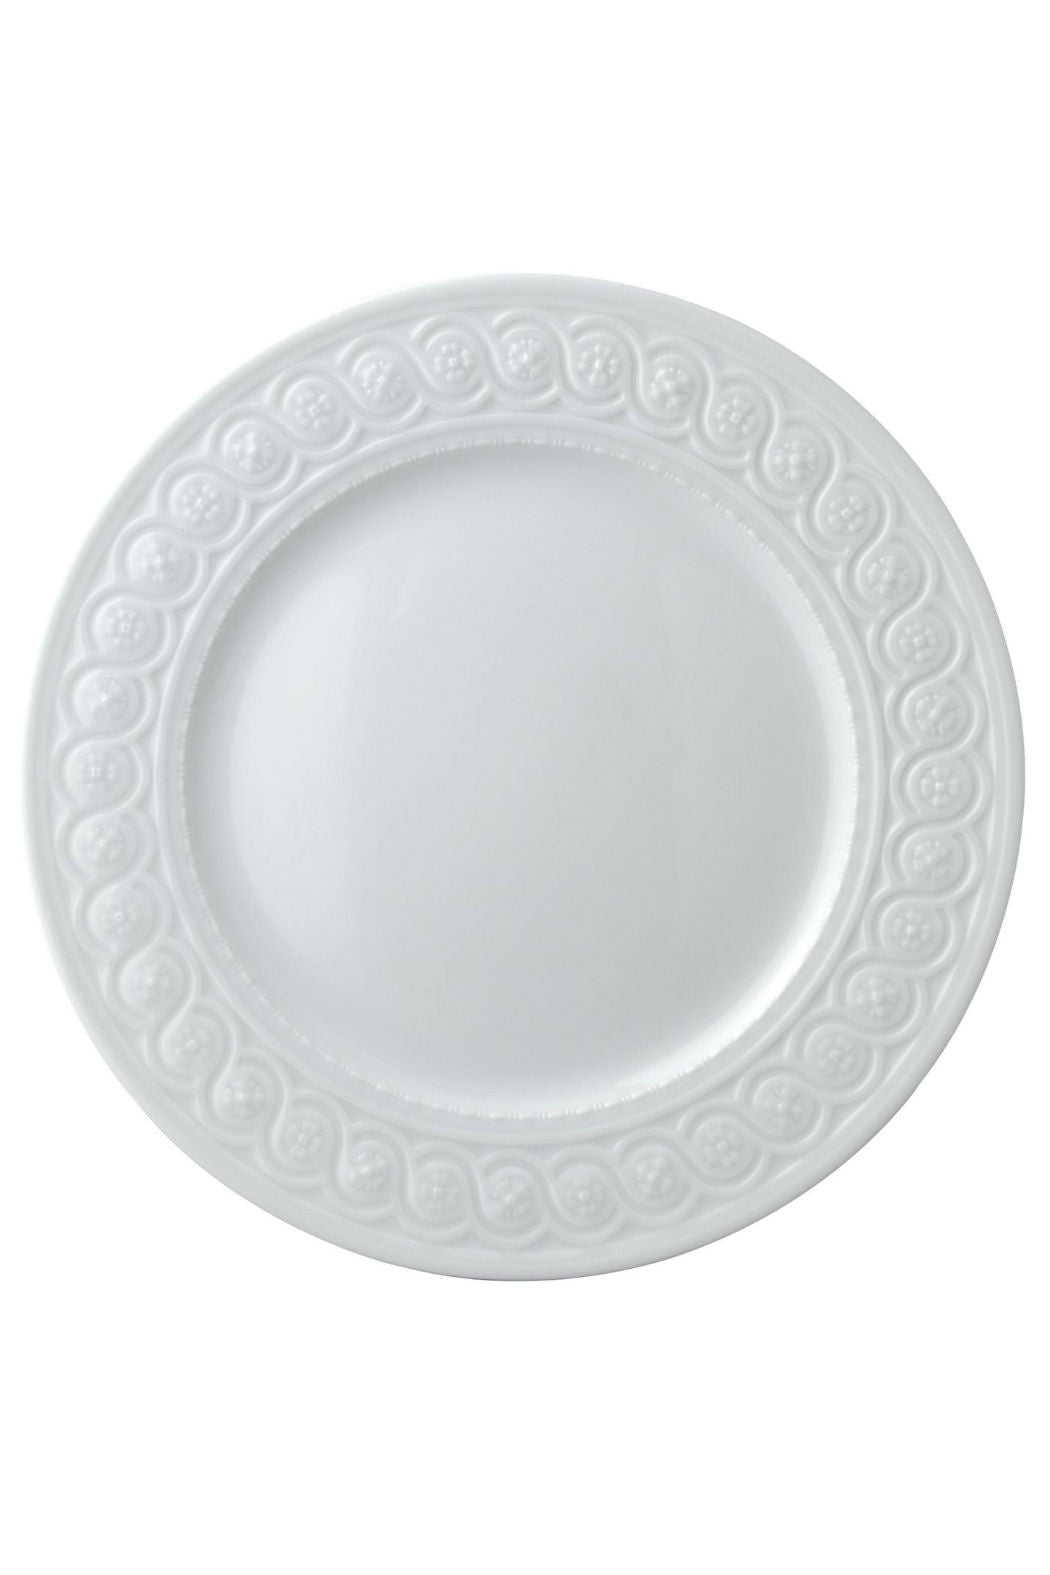 Bernardaud Louvre Dinner Plate White Everyday Dishes- New Orientation